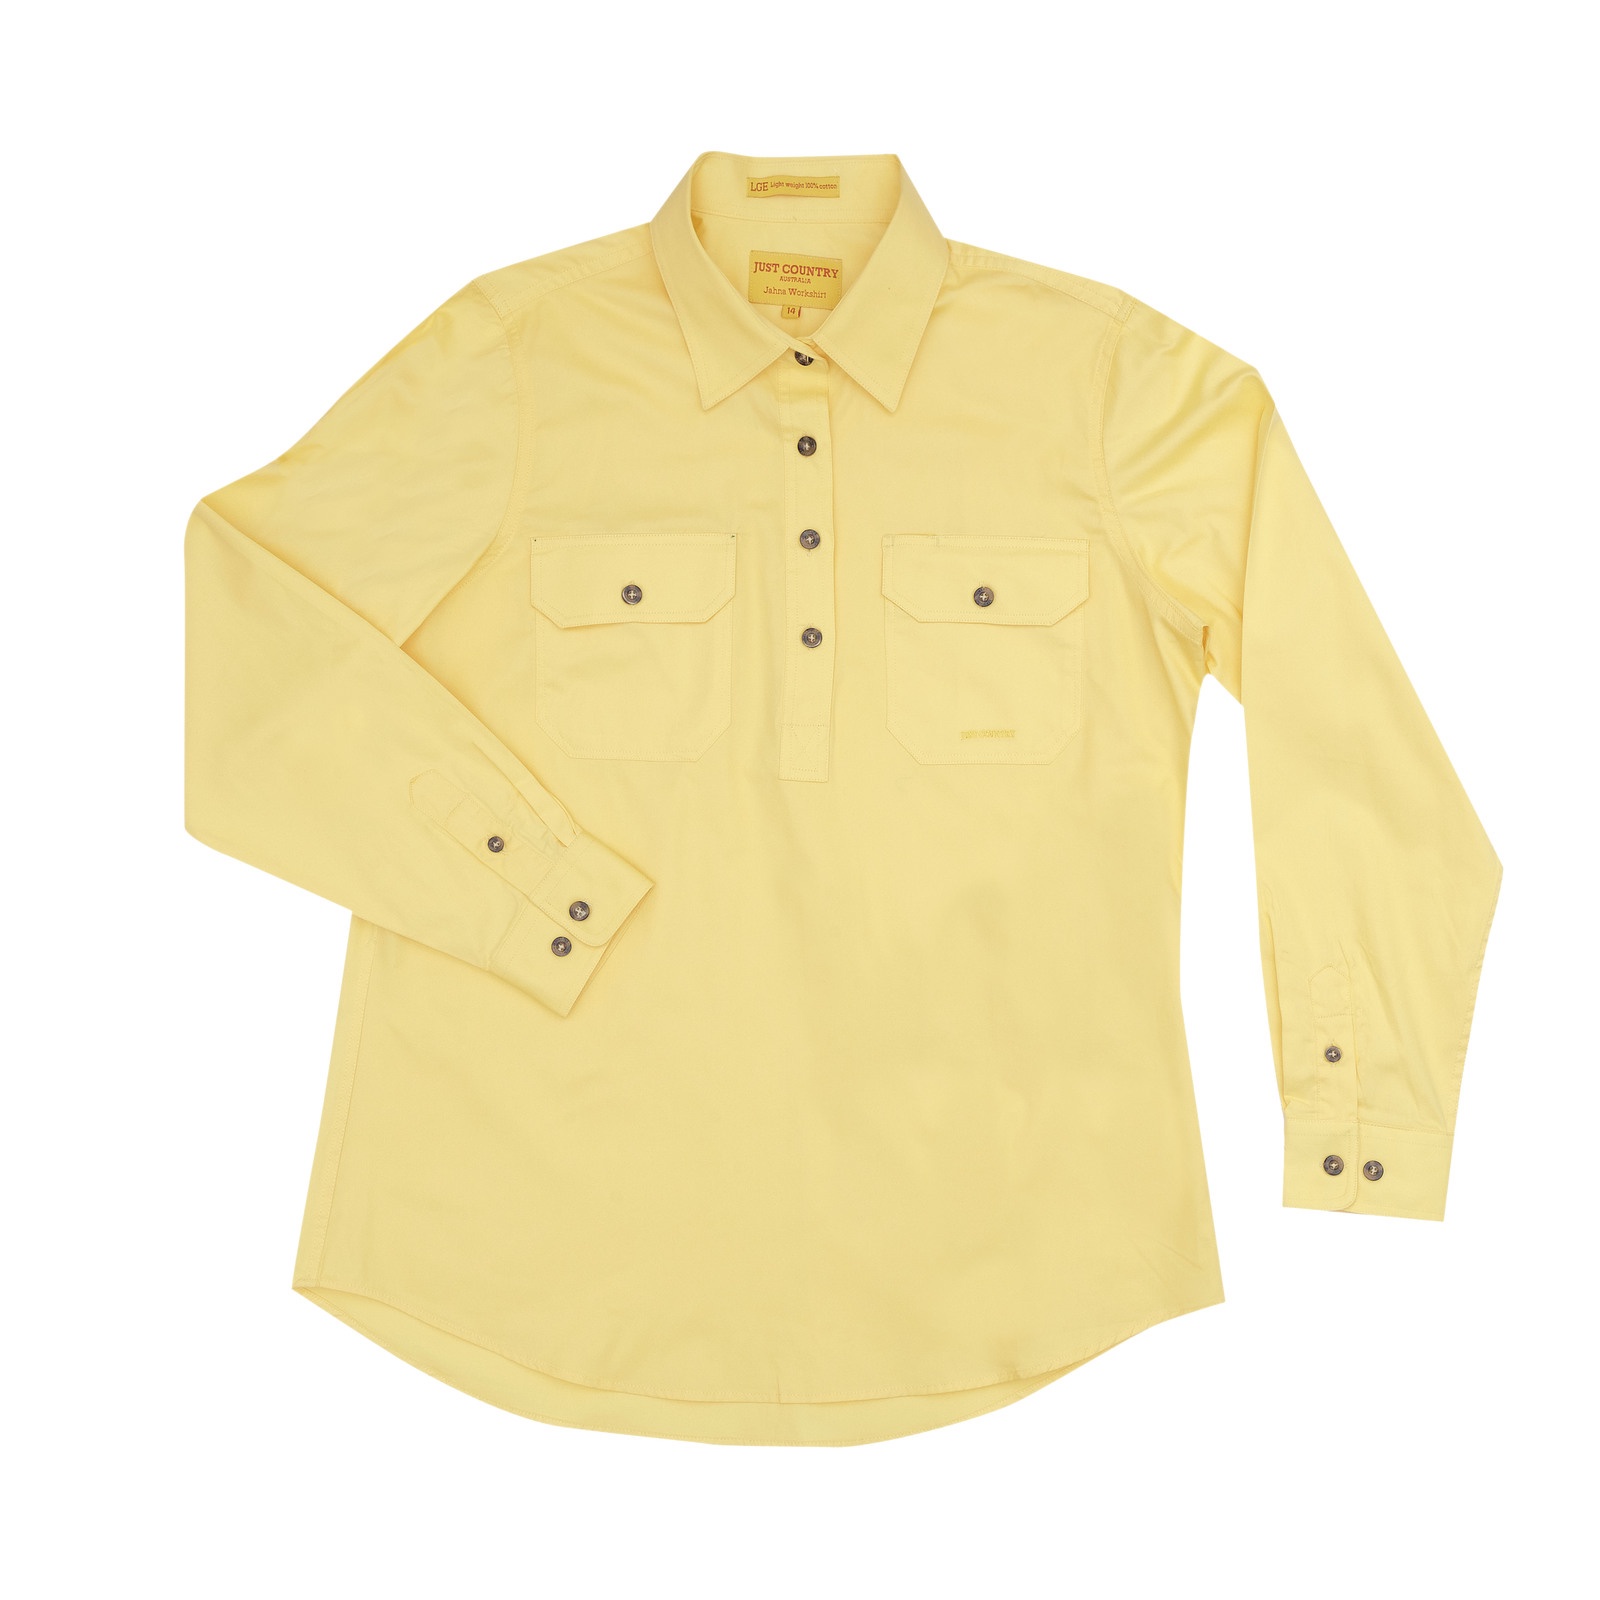 Just Country Men's Work Shirt 'Cameron' 100% Cotton 1/2 Button Long ...